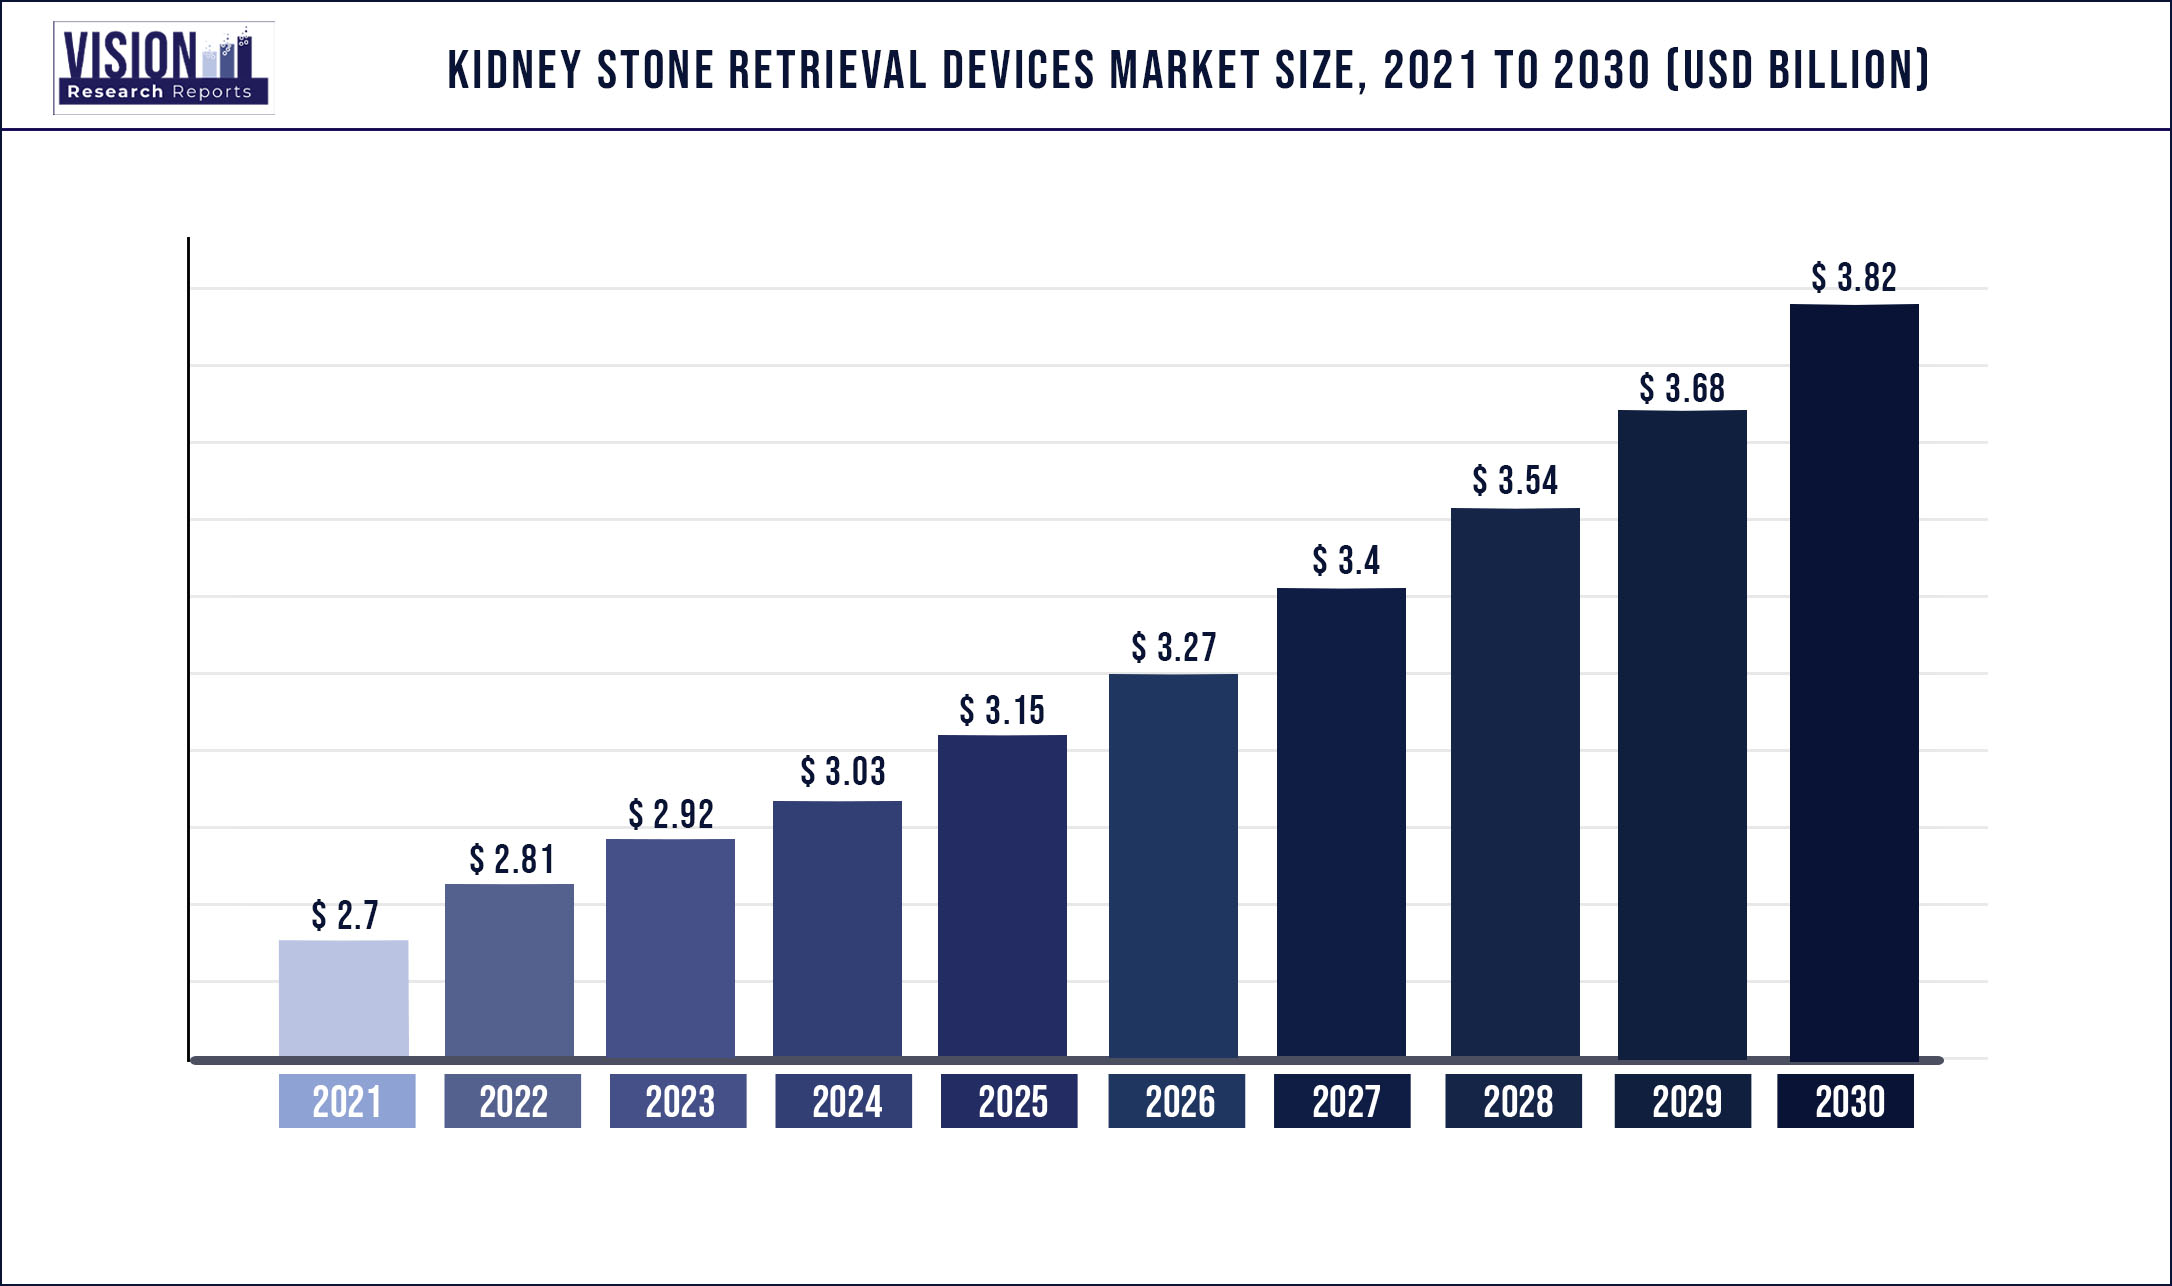 Kidney Stone Retrieval Devices Market Size 2021 to 2030